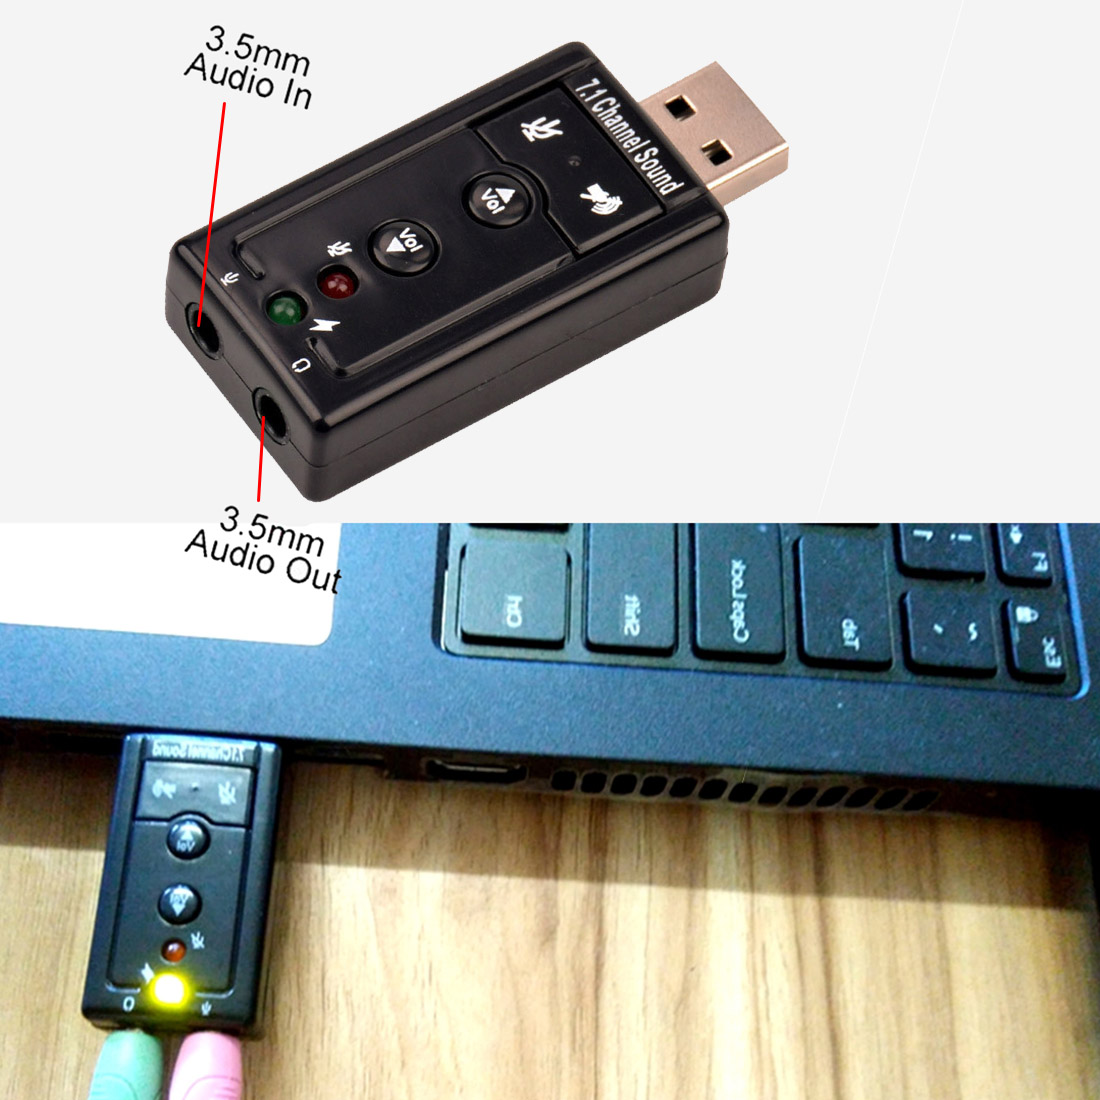 Etmakit Microphone Audio External USB Audio Sound Card Adapter Virtual 7.1 USB 2.0 Mic Speaker Audio Headset